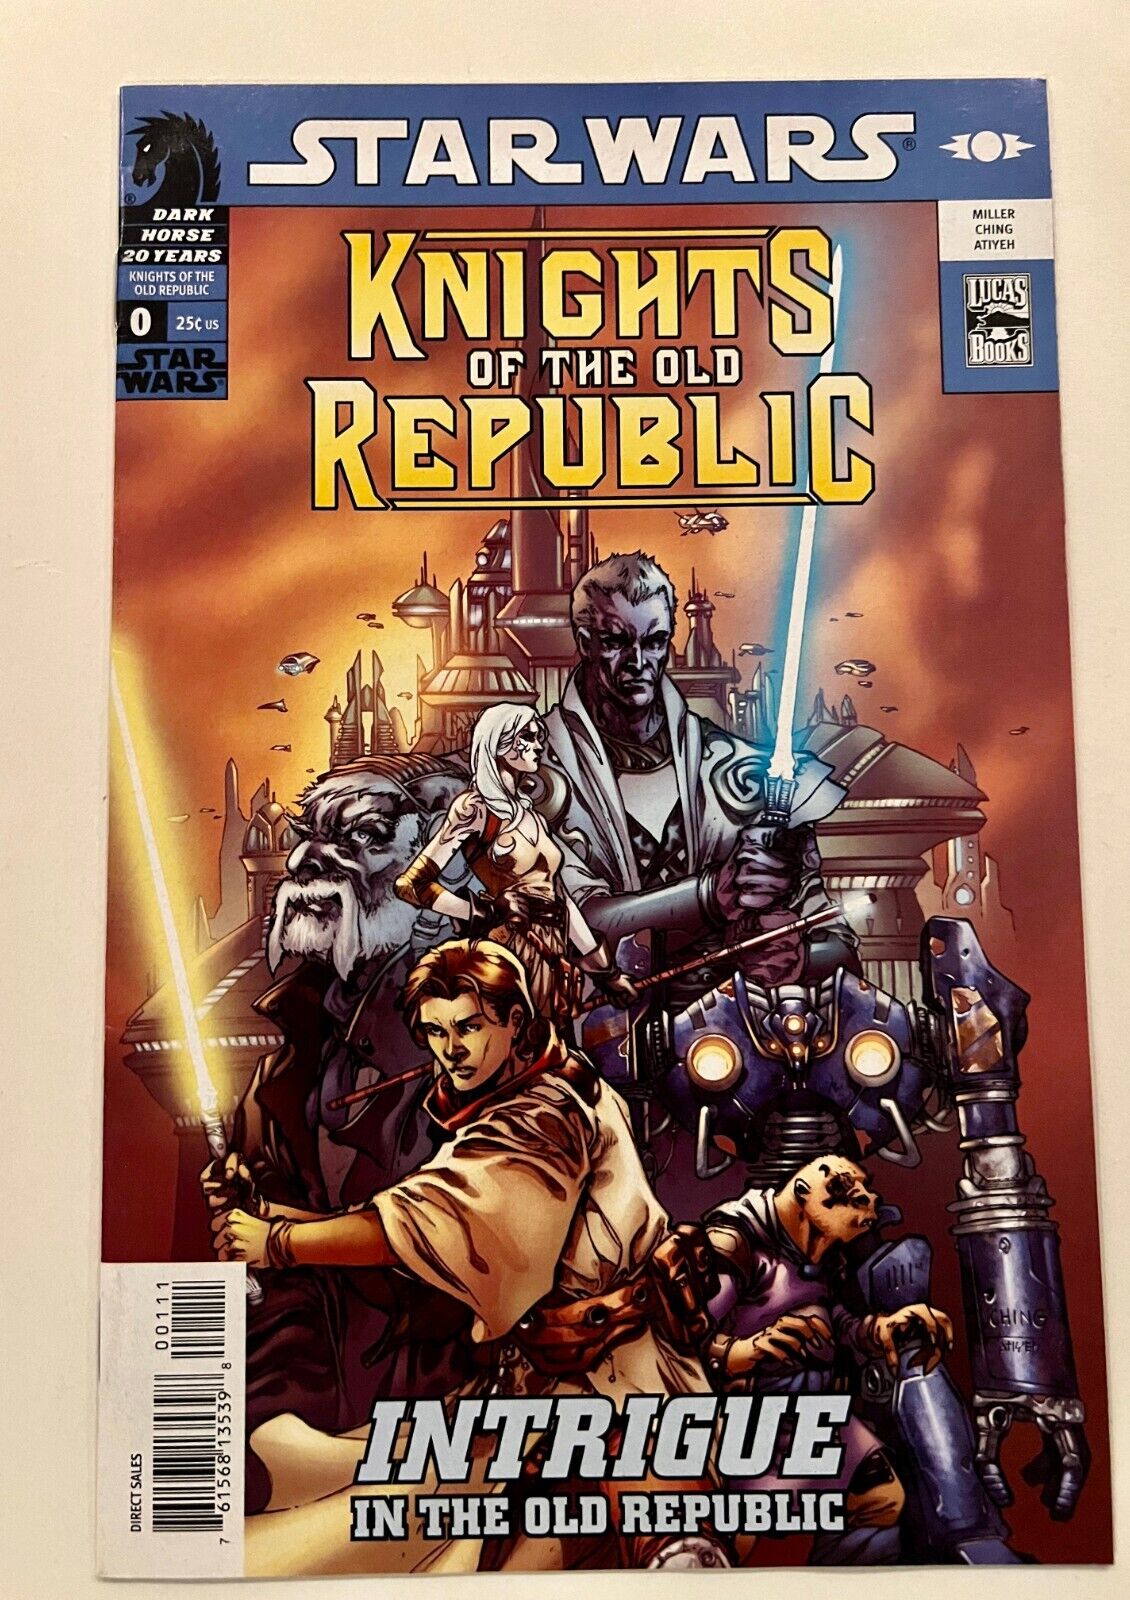 Star Wars KNIGHTS OF THE OLD REPUBLIC #0 (Dark Horse Comics, 2006)